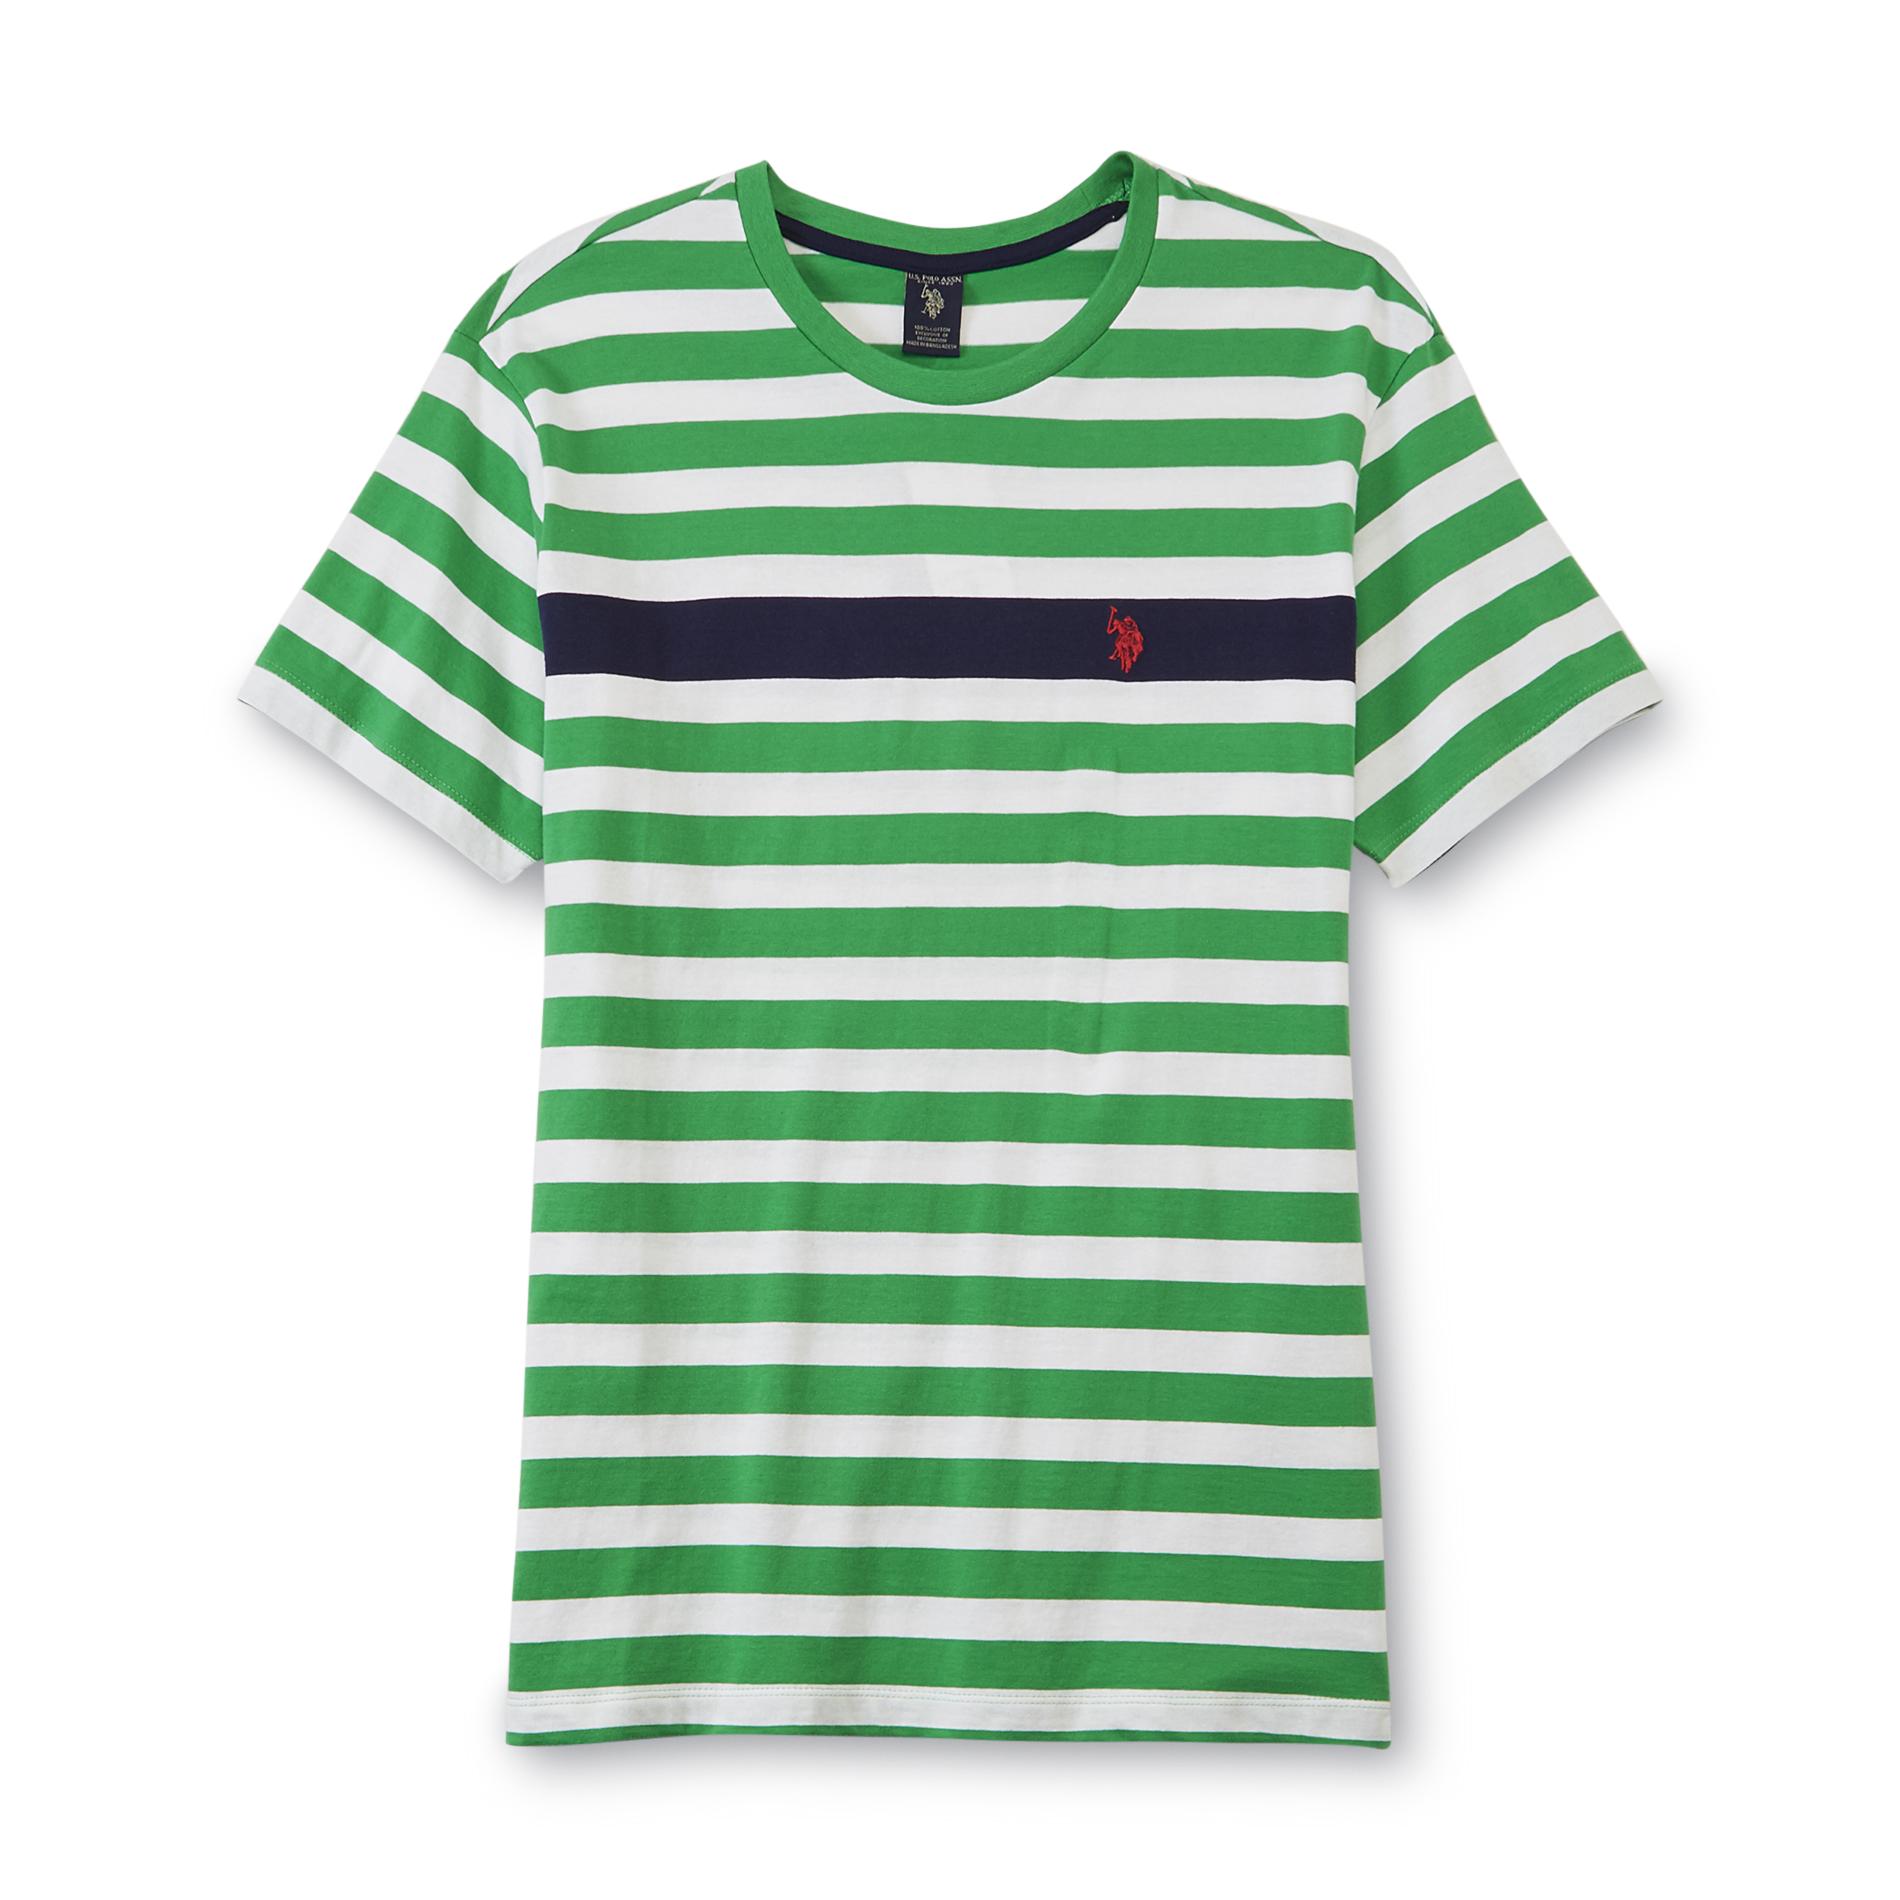 U.S. Polo Assn. Men's T-Shirt - Striped